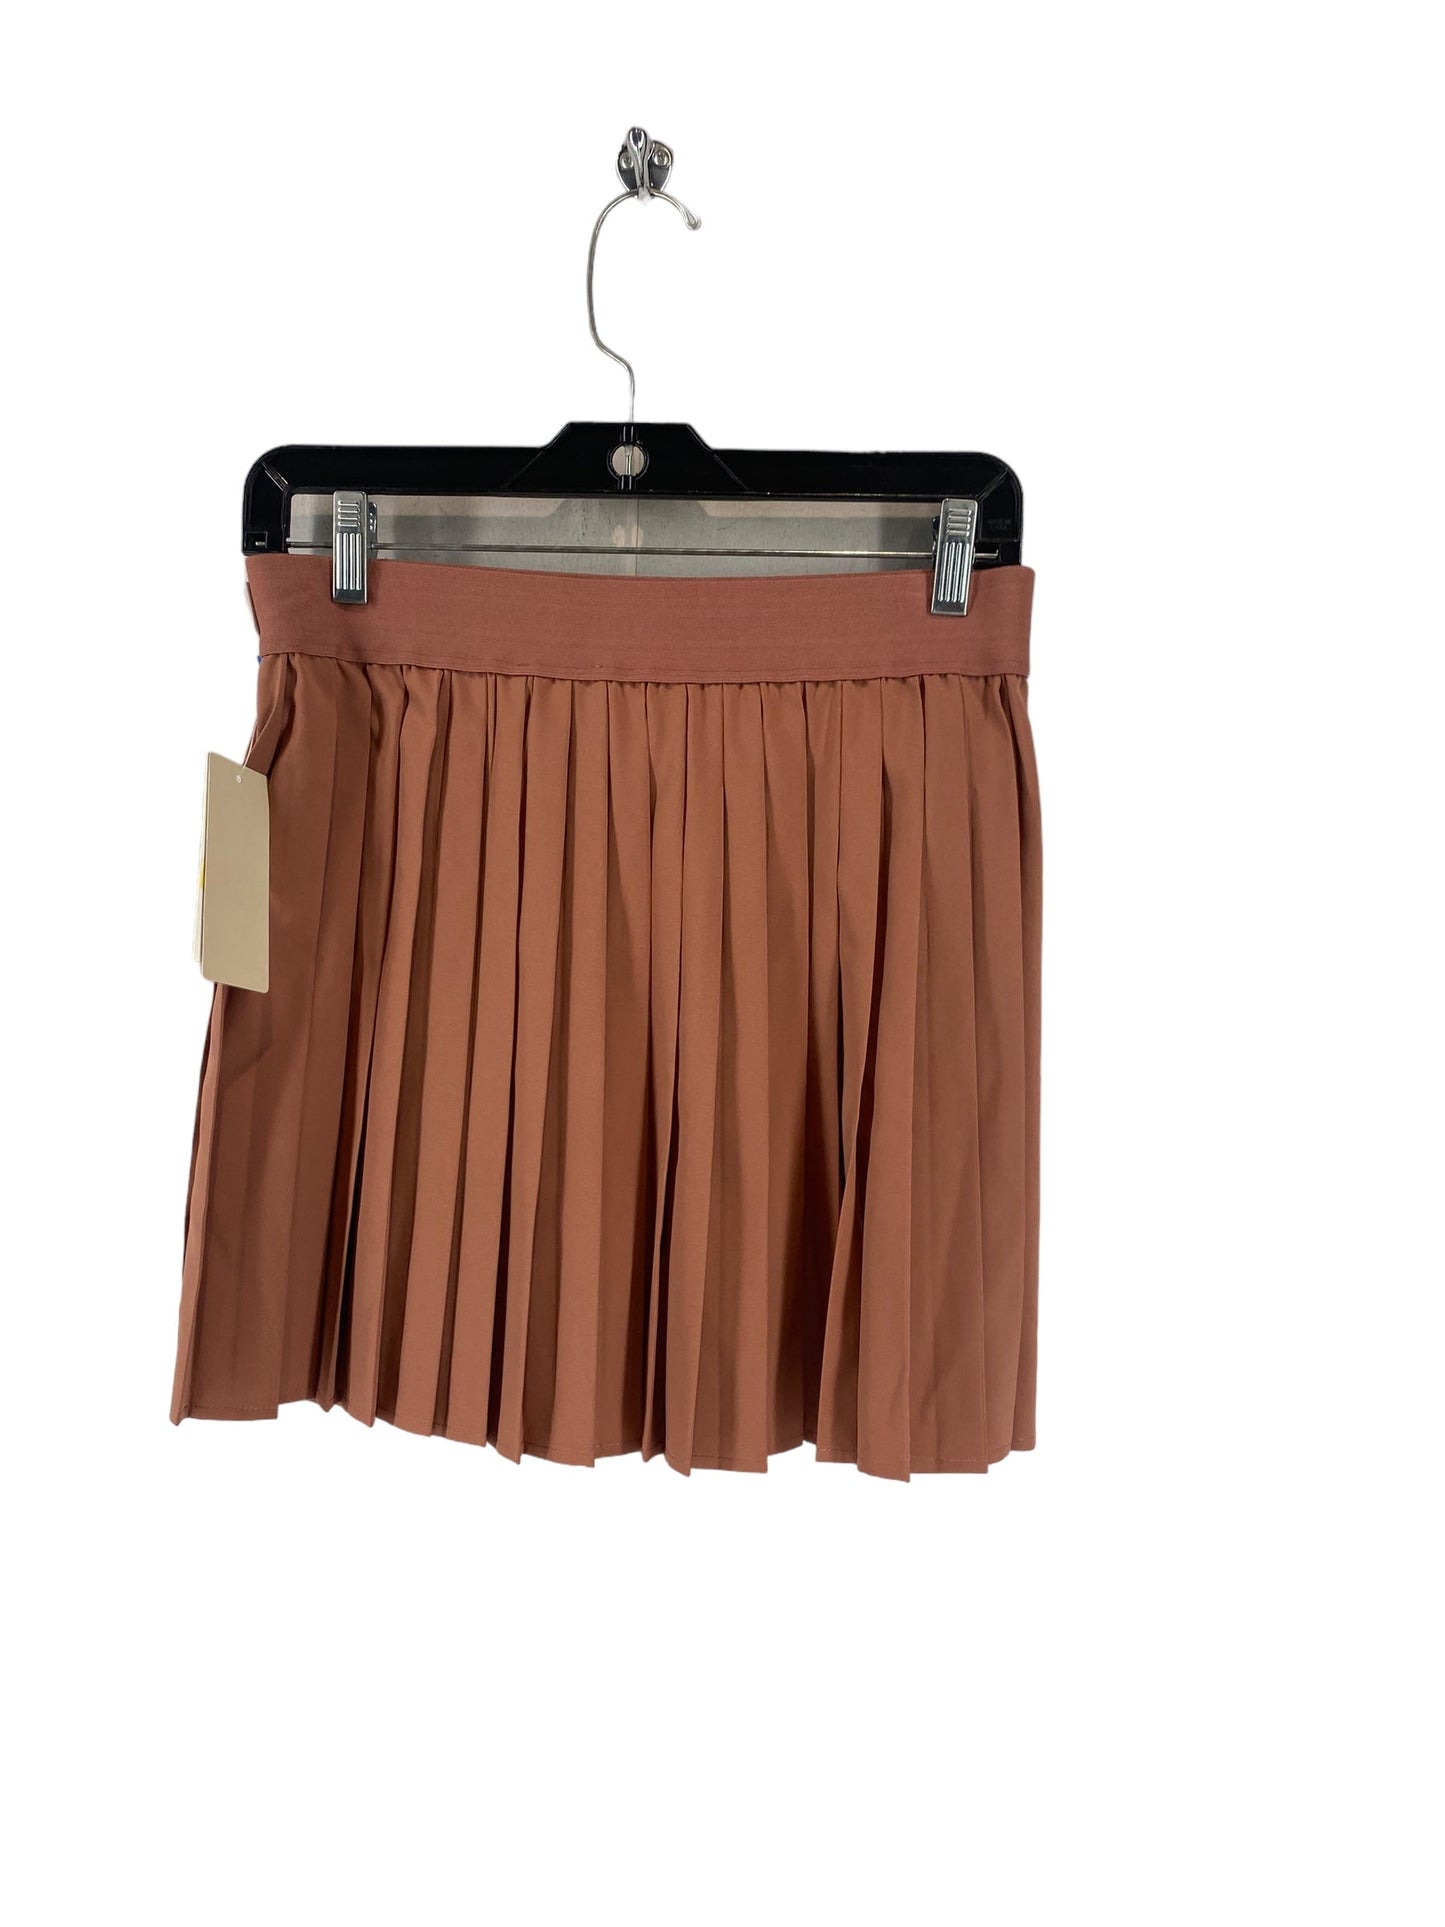 Copper Athletic Skirt Jolt, Size S